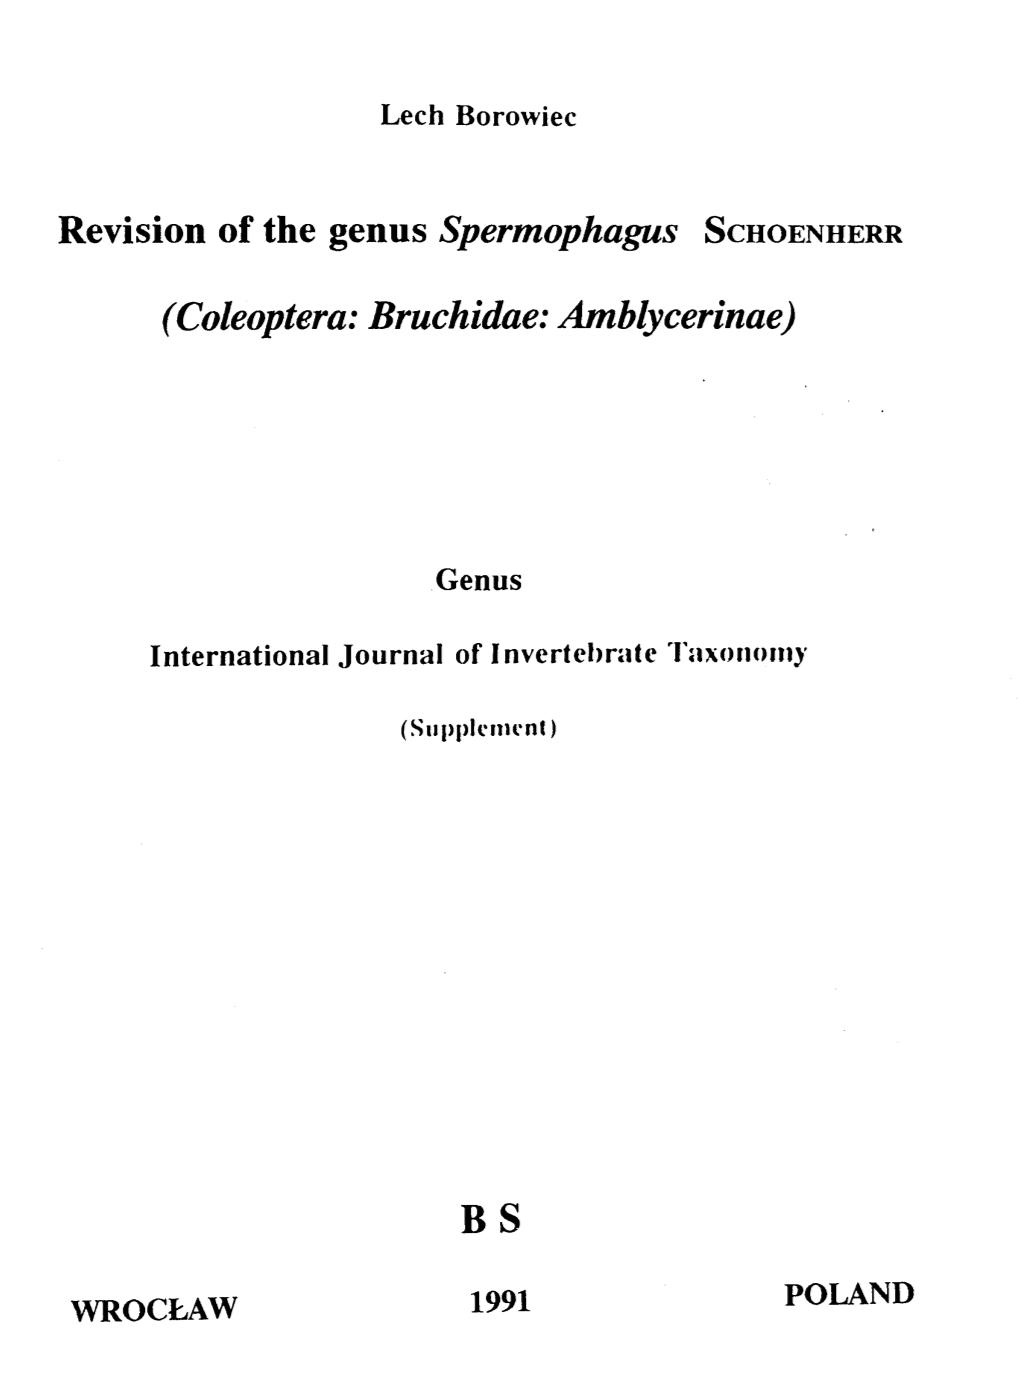 Revision of the Genus Spermophagus Schoenherr (Coleoptera: Bruchidae: Amblycerinae)